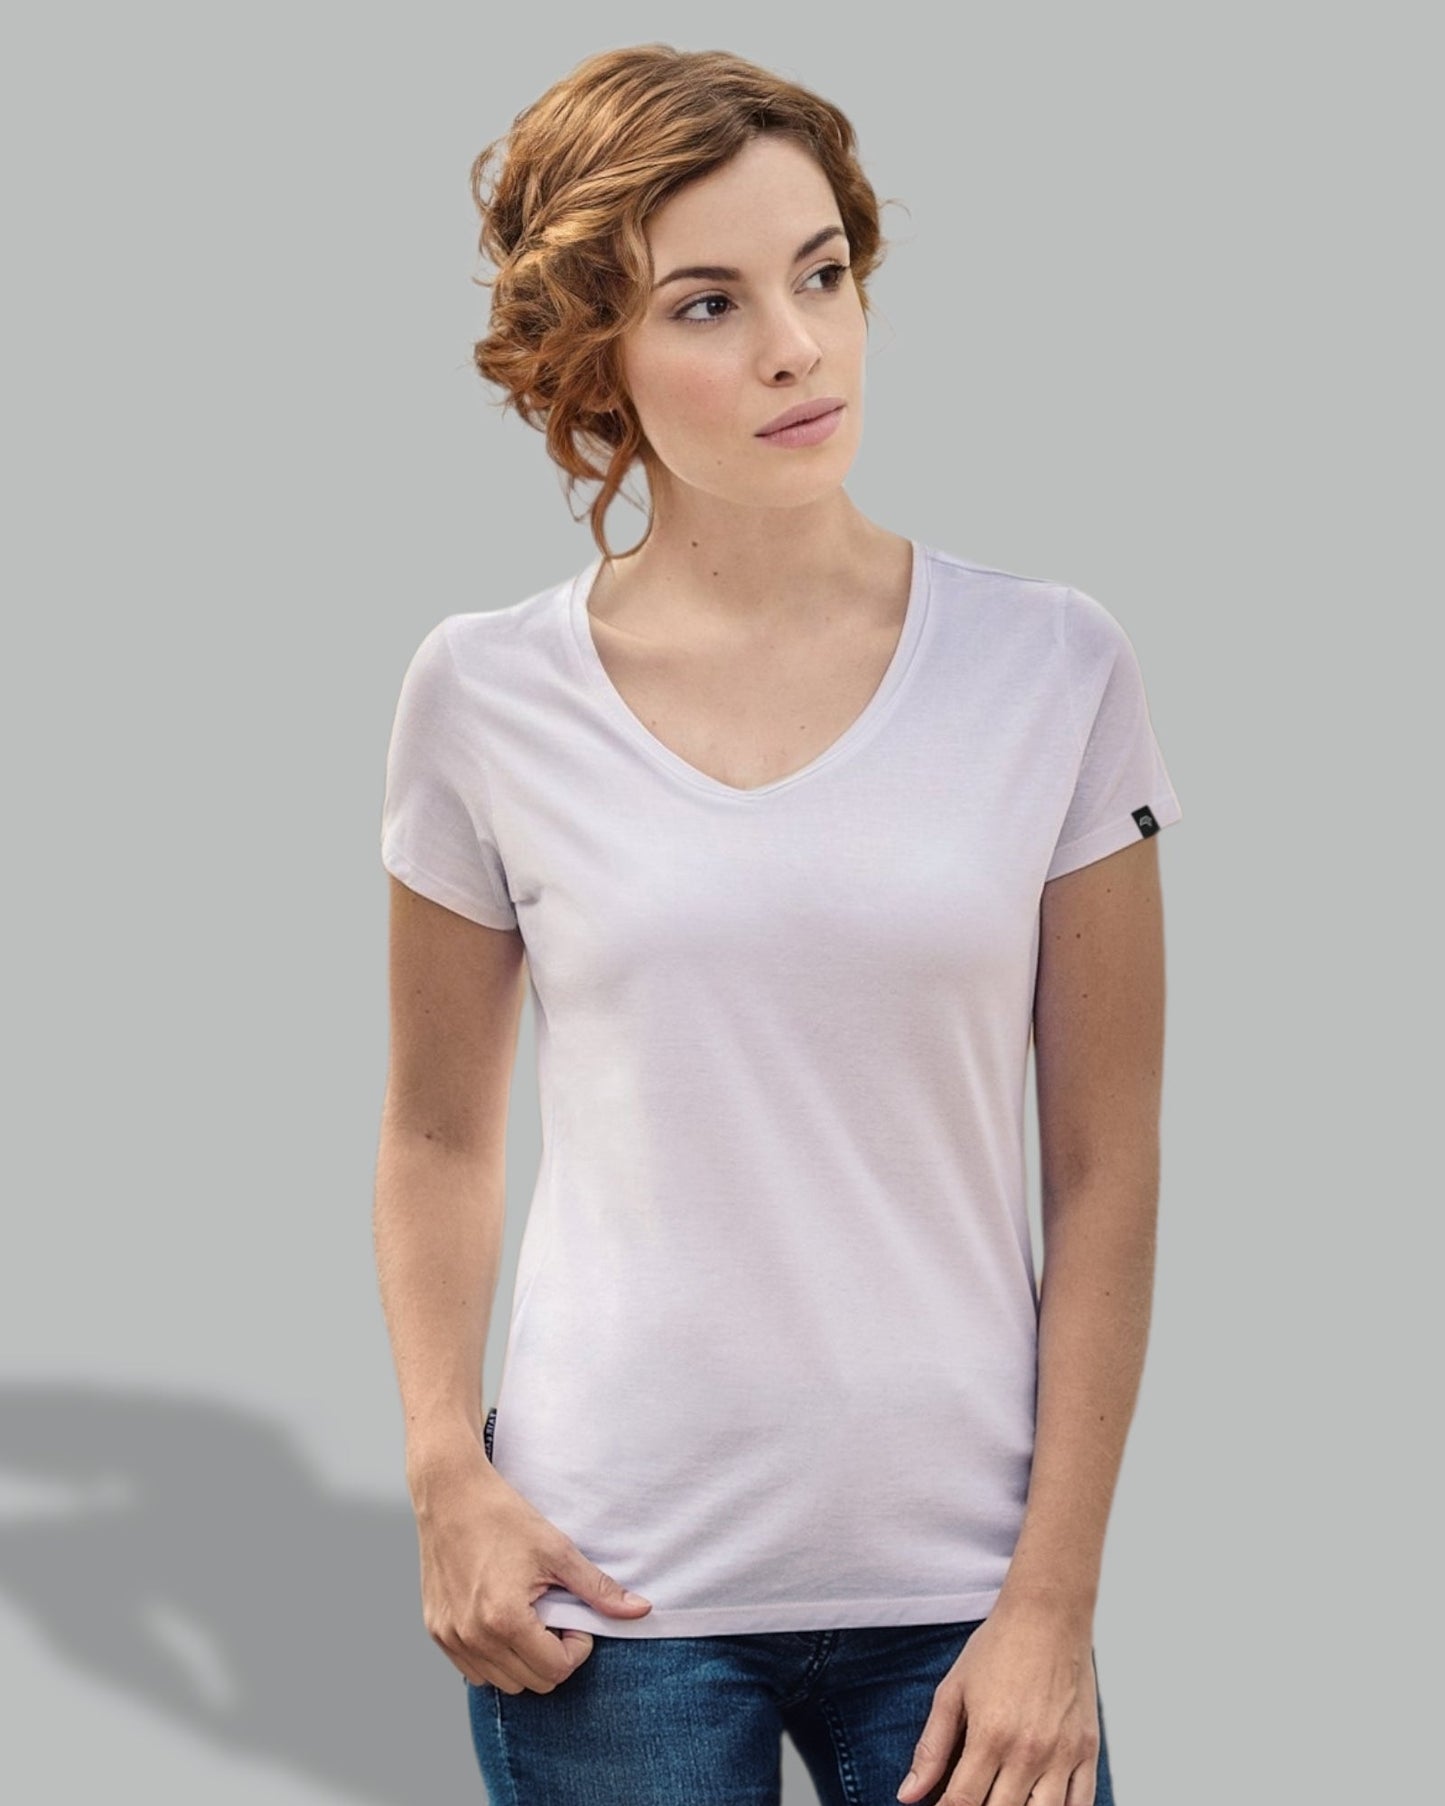 RMH 0202 ― Damen Luxury Bio-Baumwolle V-Neck T-Shirt - Rot